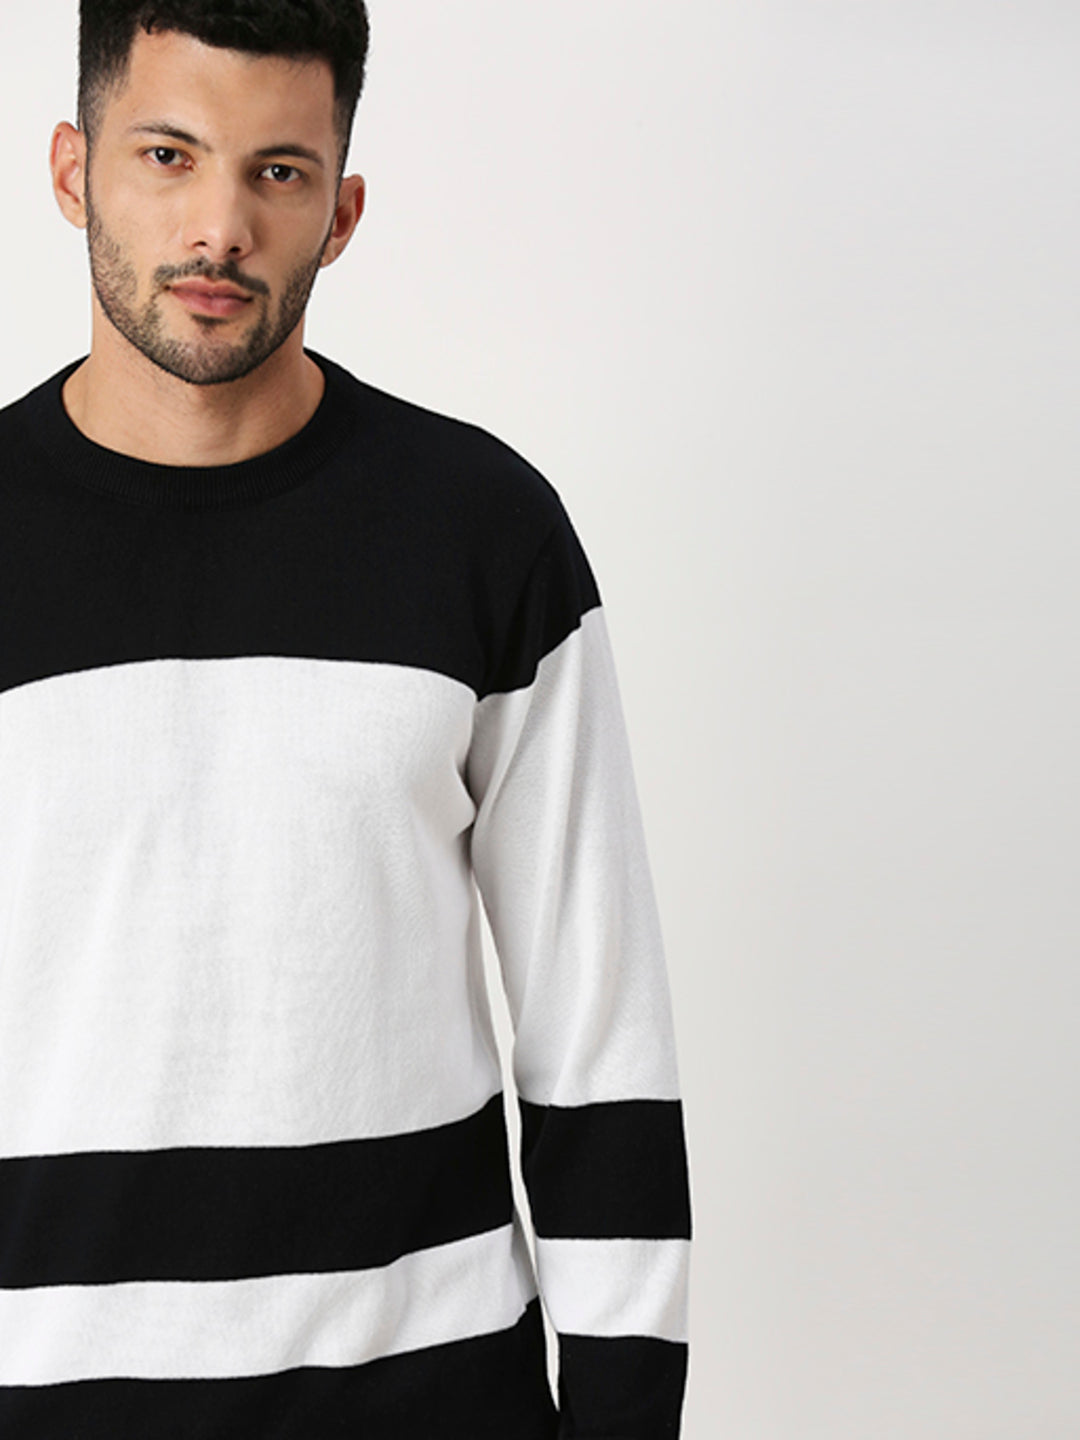 White and Black Sweatshirt For Mens